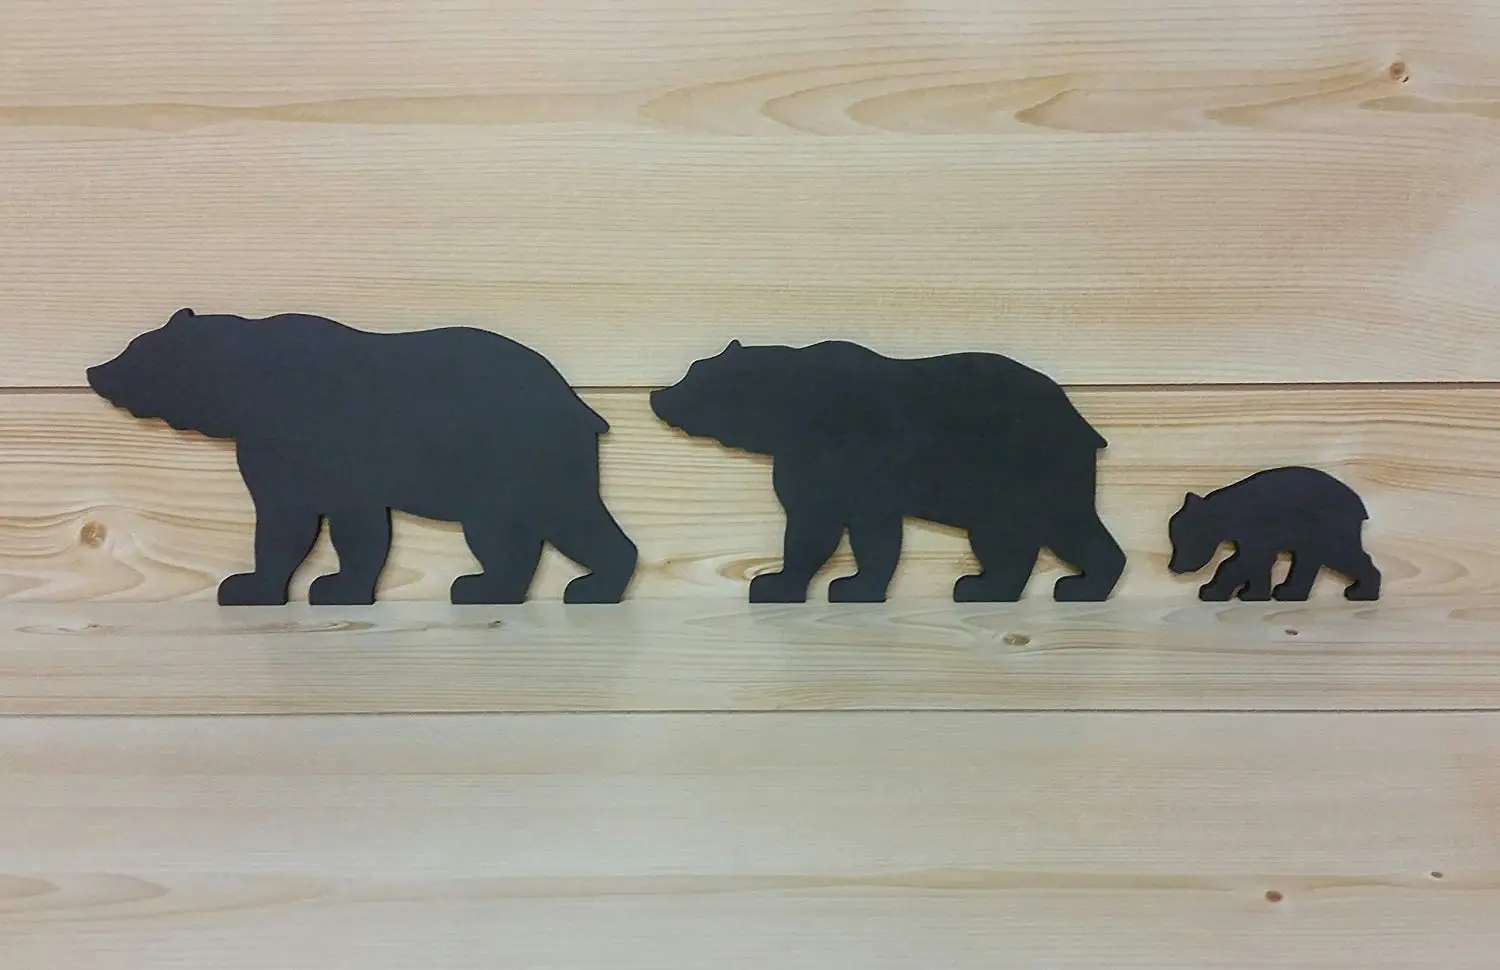 Bears 2 shop. Силуэт медведя. Семья медведей силуэт. Силуэты 3 медведей. Очертания три медведя.